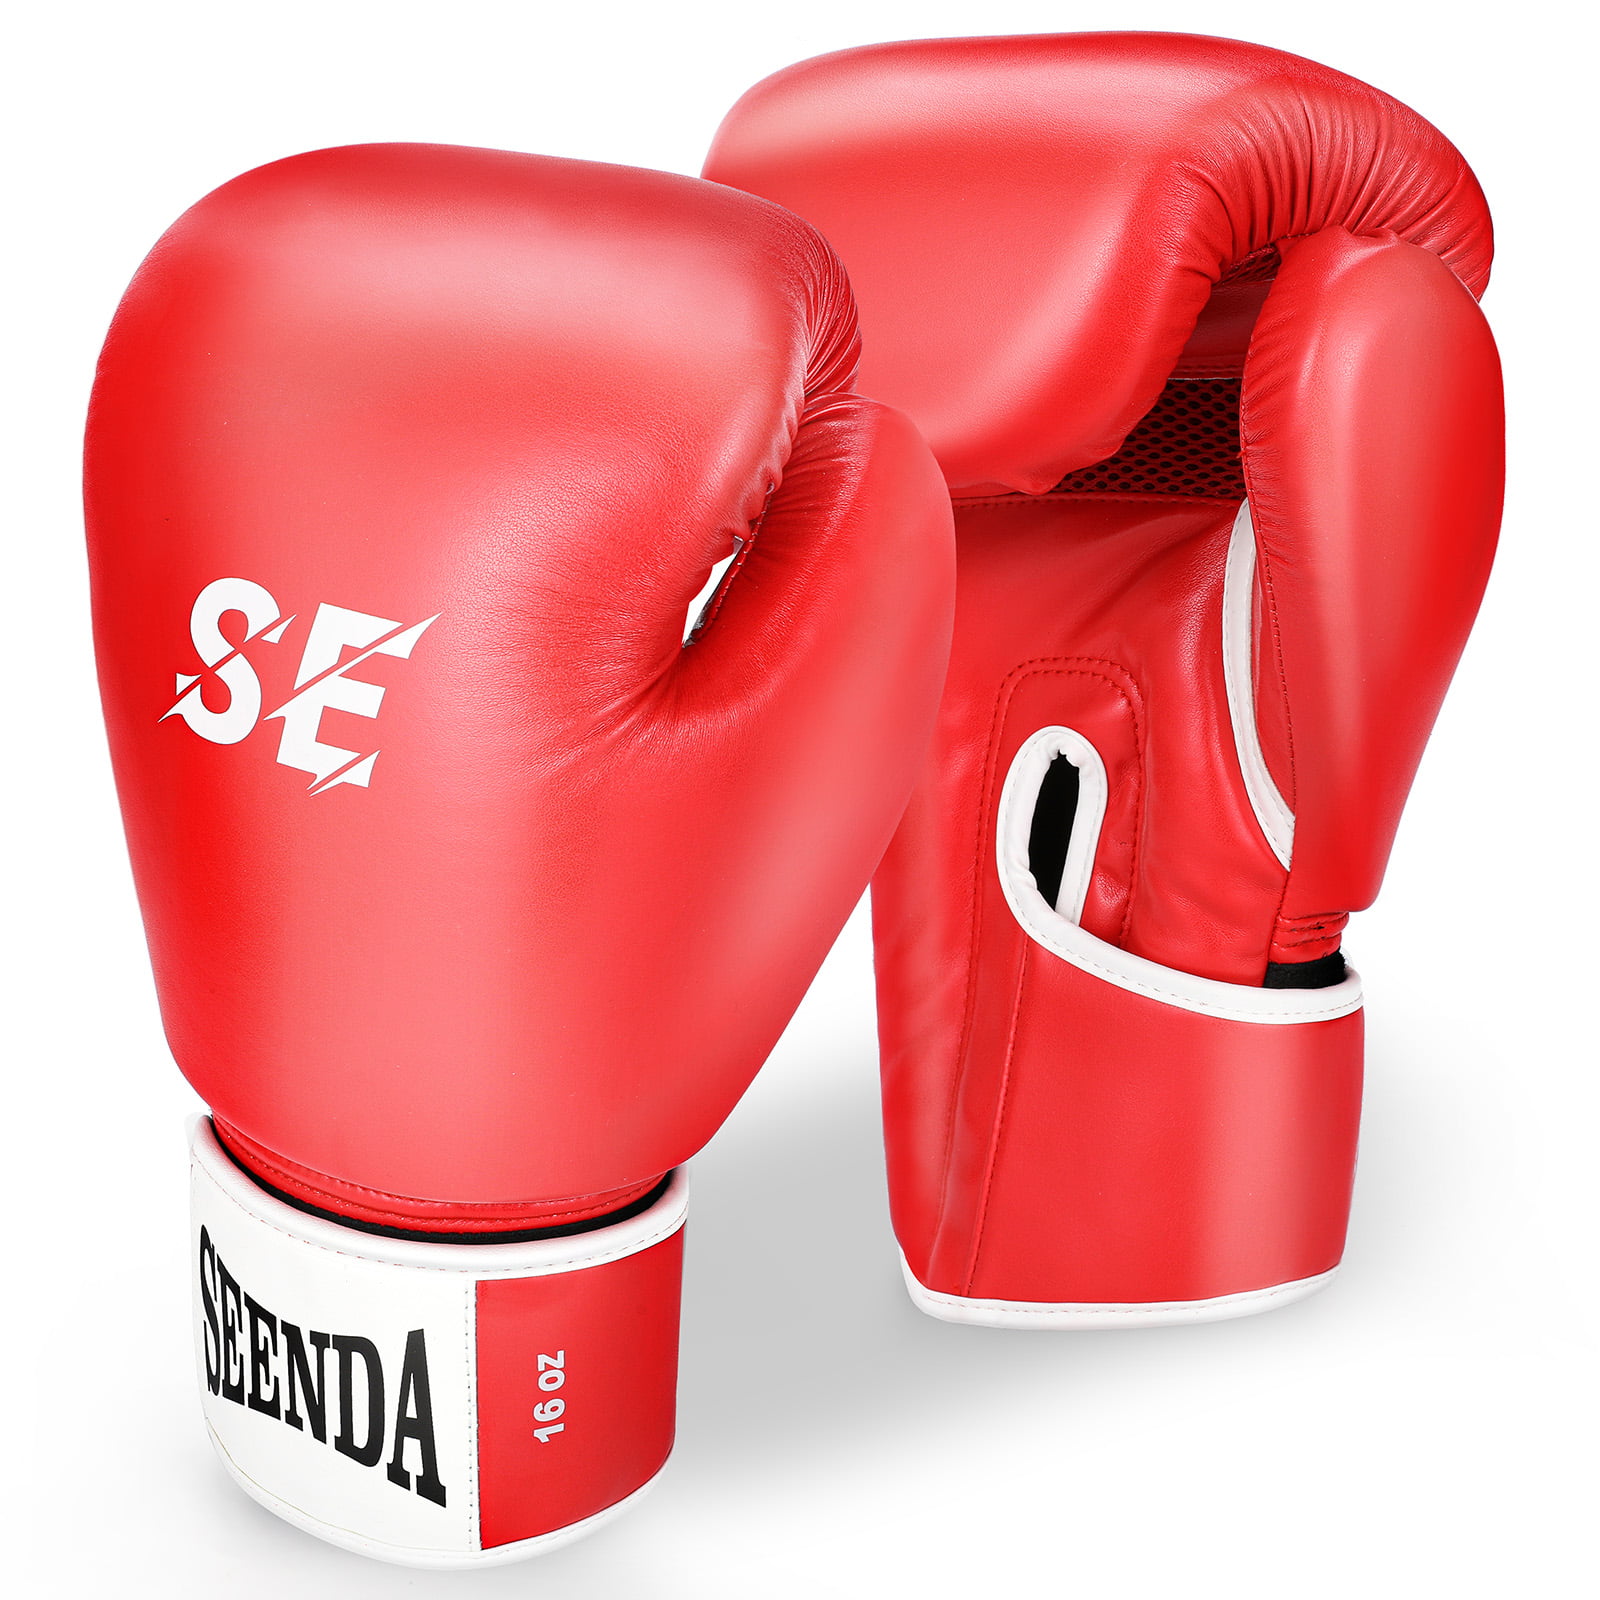 SUPERIOR Boxing Gloves Punching Training Sparring MMA Kickboxing Bag Muay Thai 